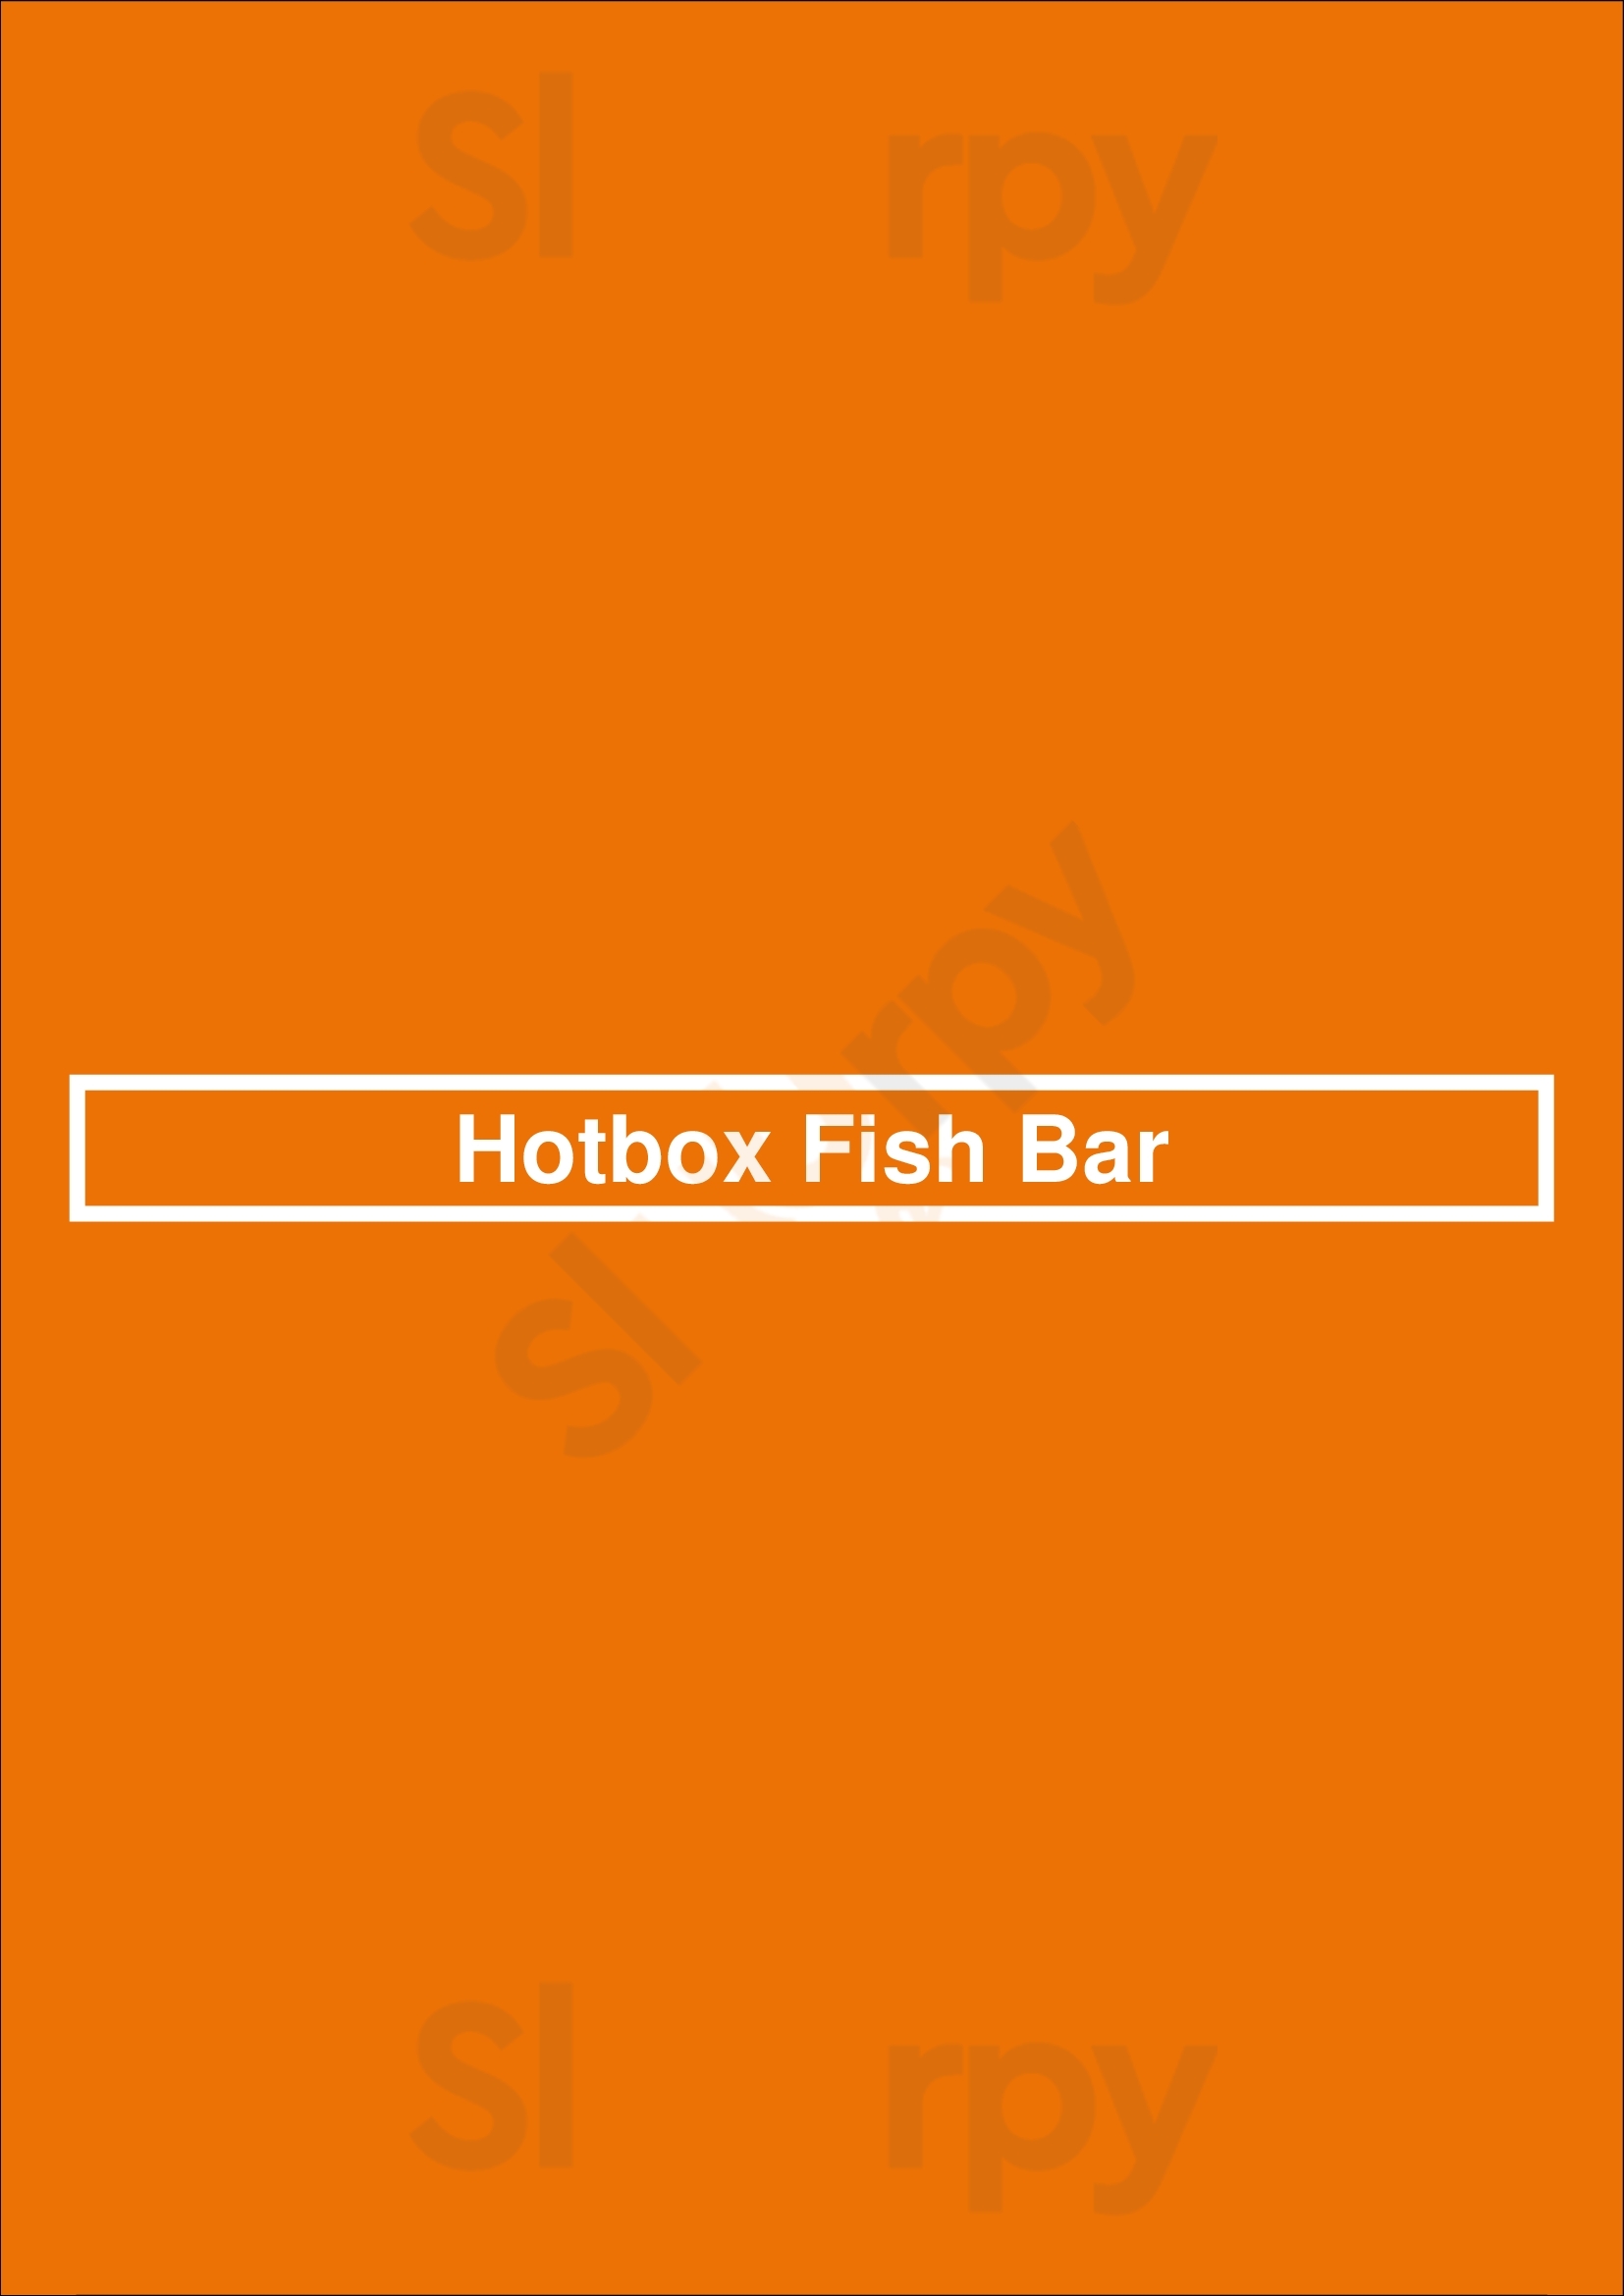 Hotbox Fish Bar Cardiff Menu - 1